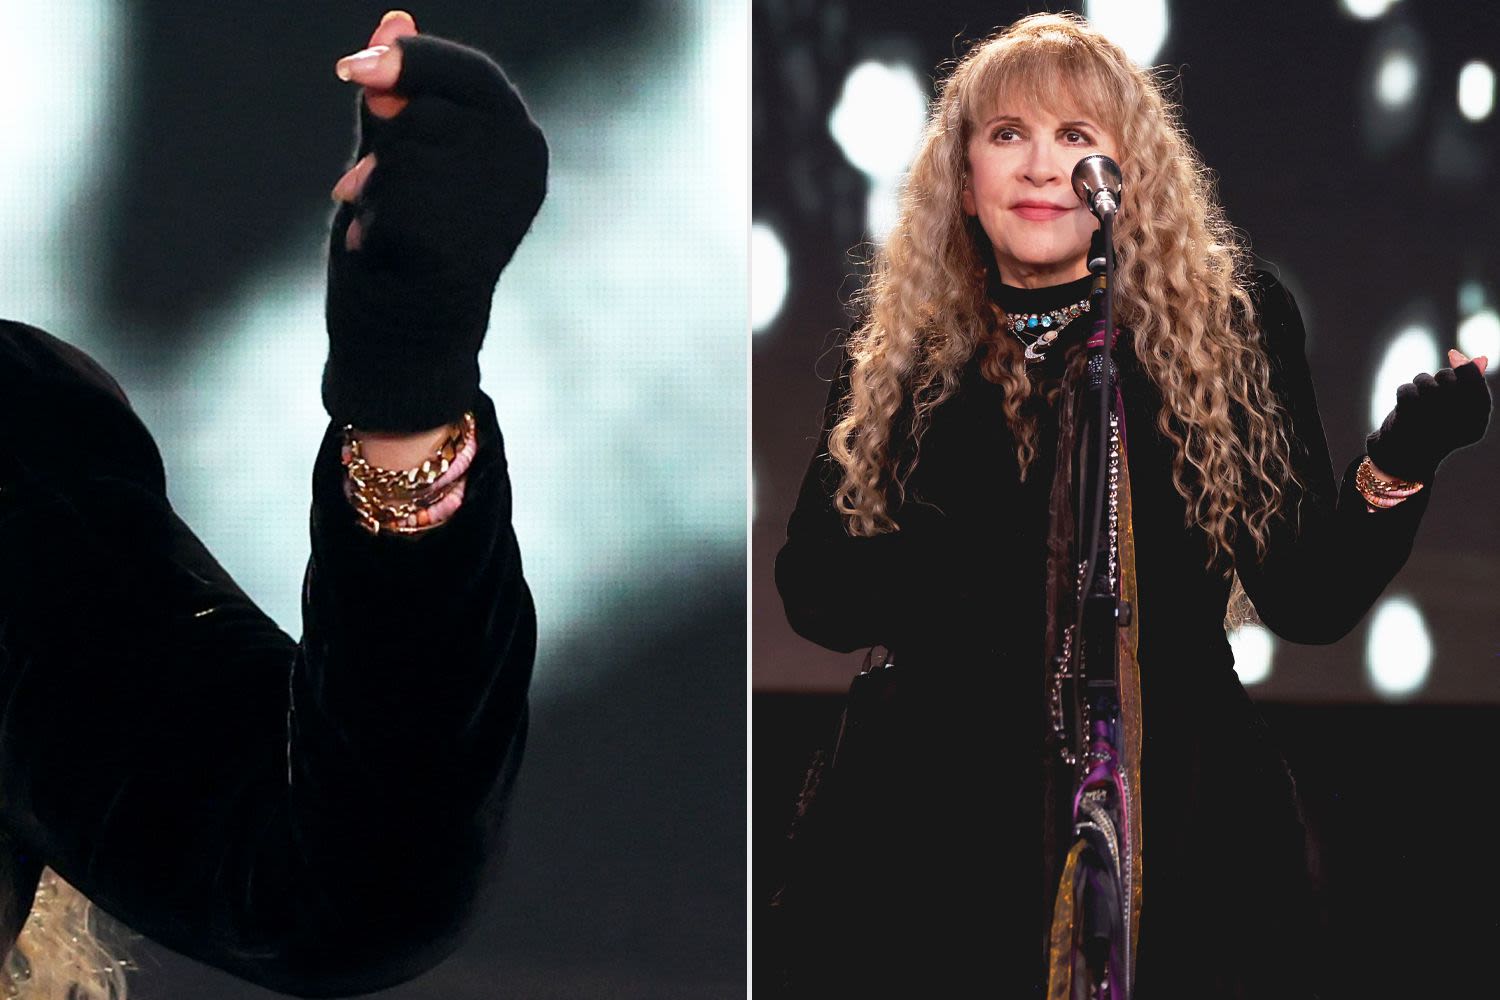 Stevie Nicks Wears “Tortured Poets Department ”Bracelet, Proving She's the Ultimate Taylor Swift Fangirl